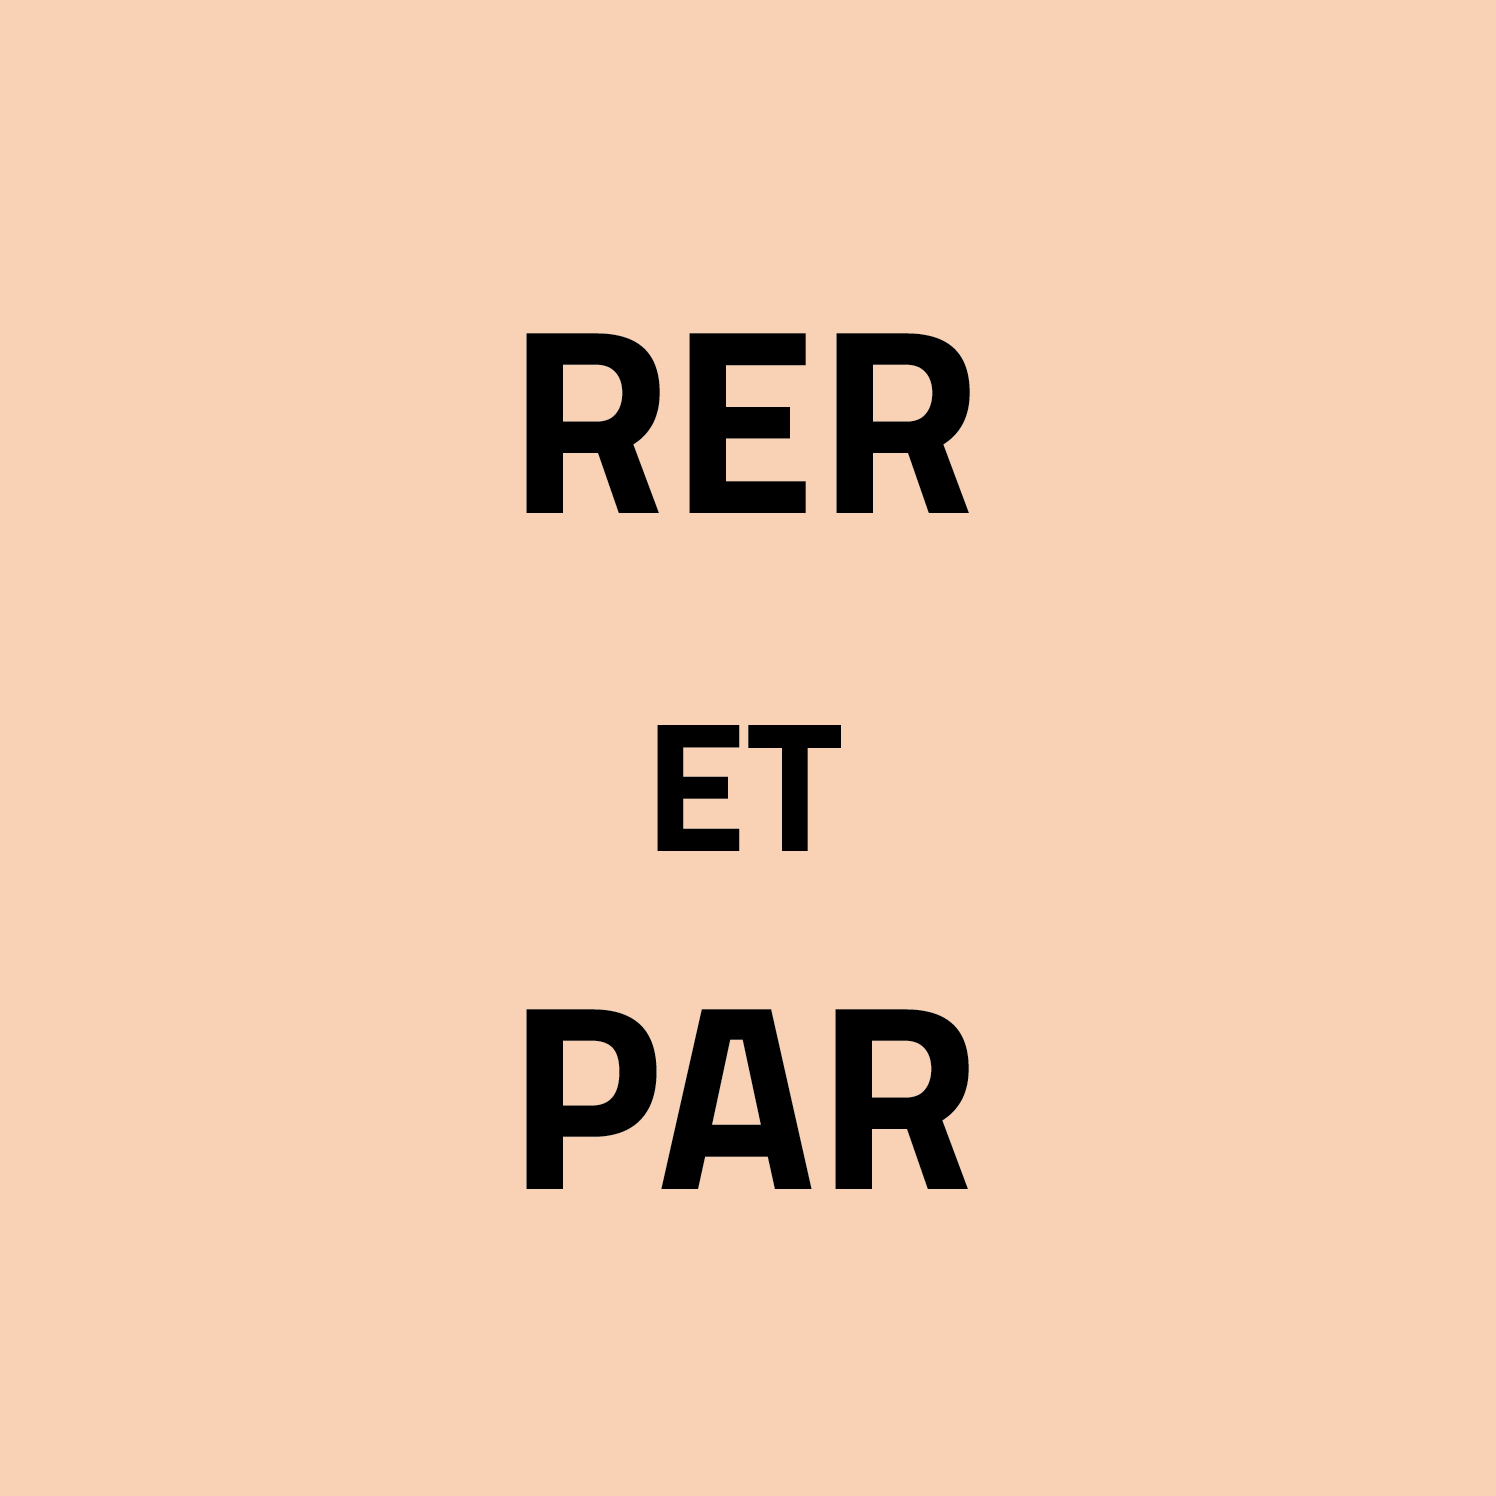 RER et PAR - Cipav 2020